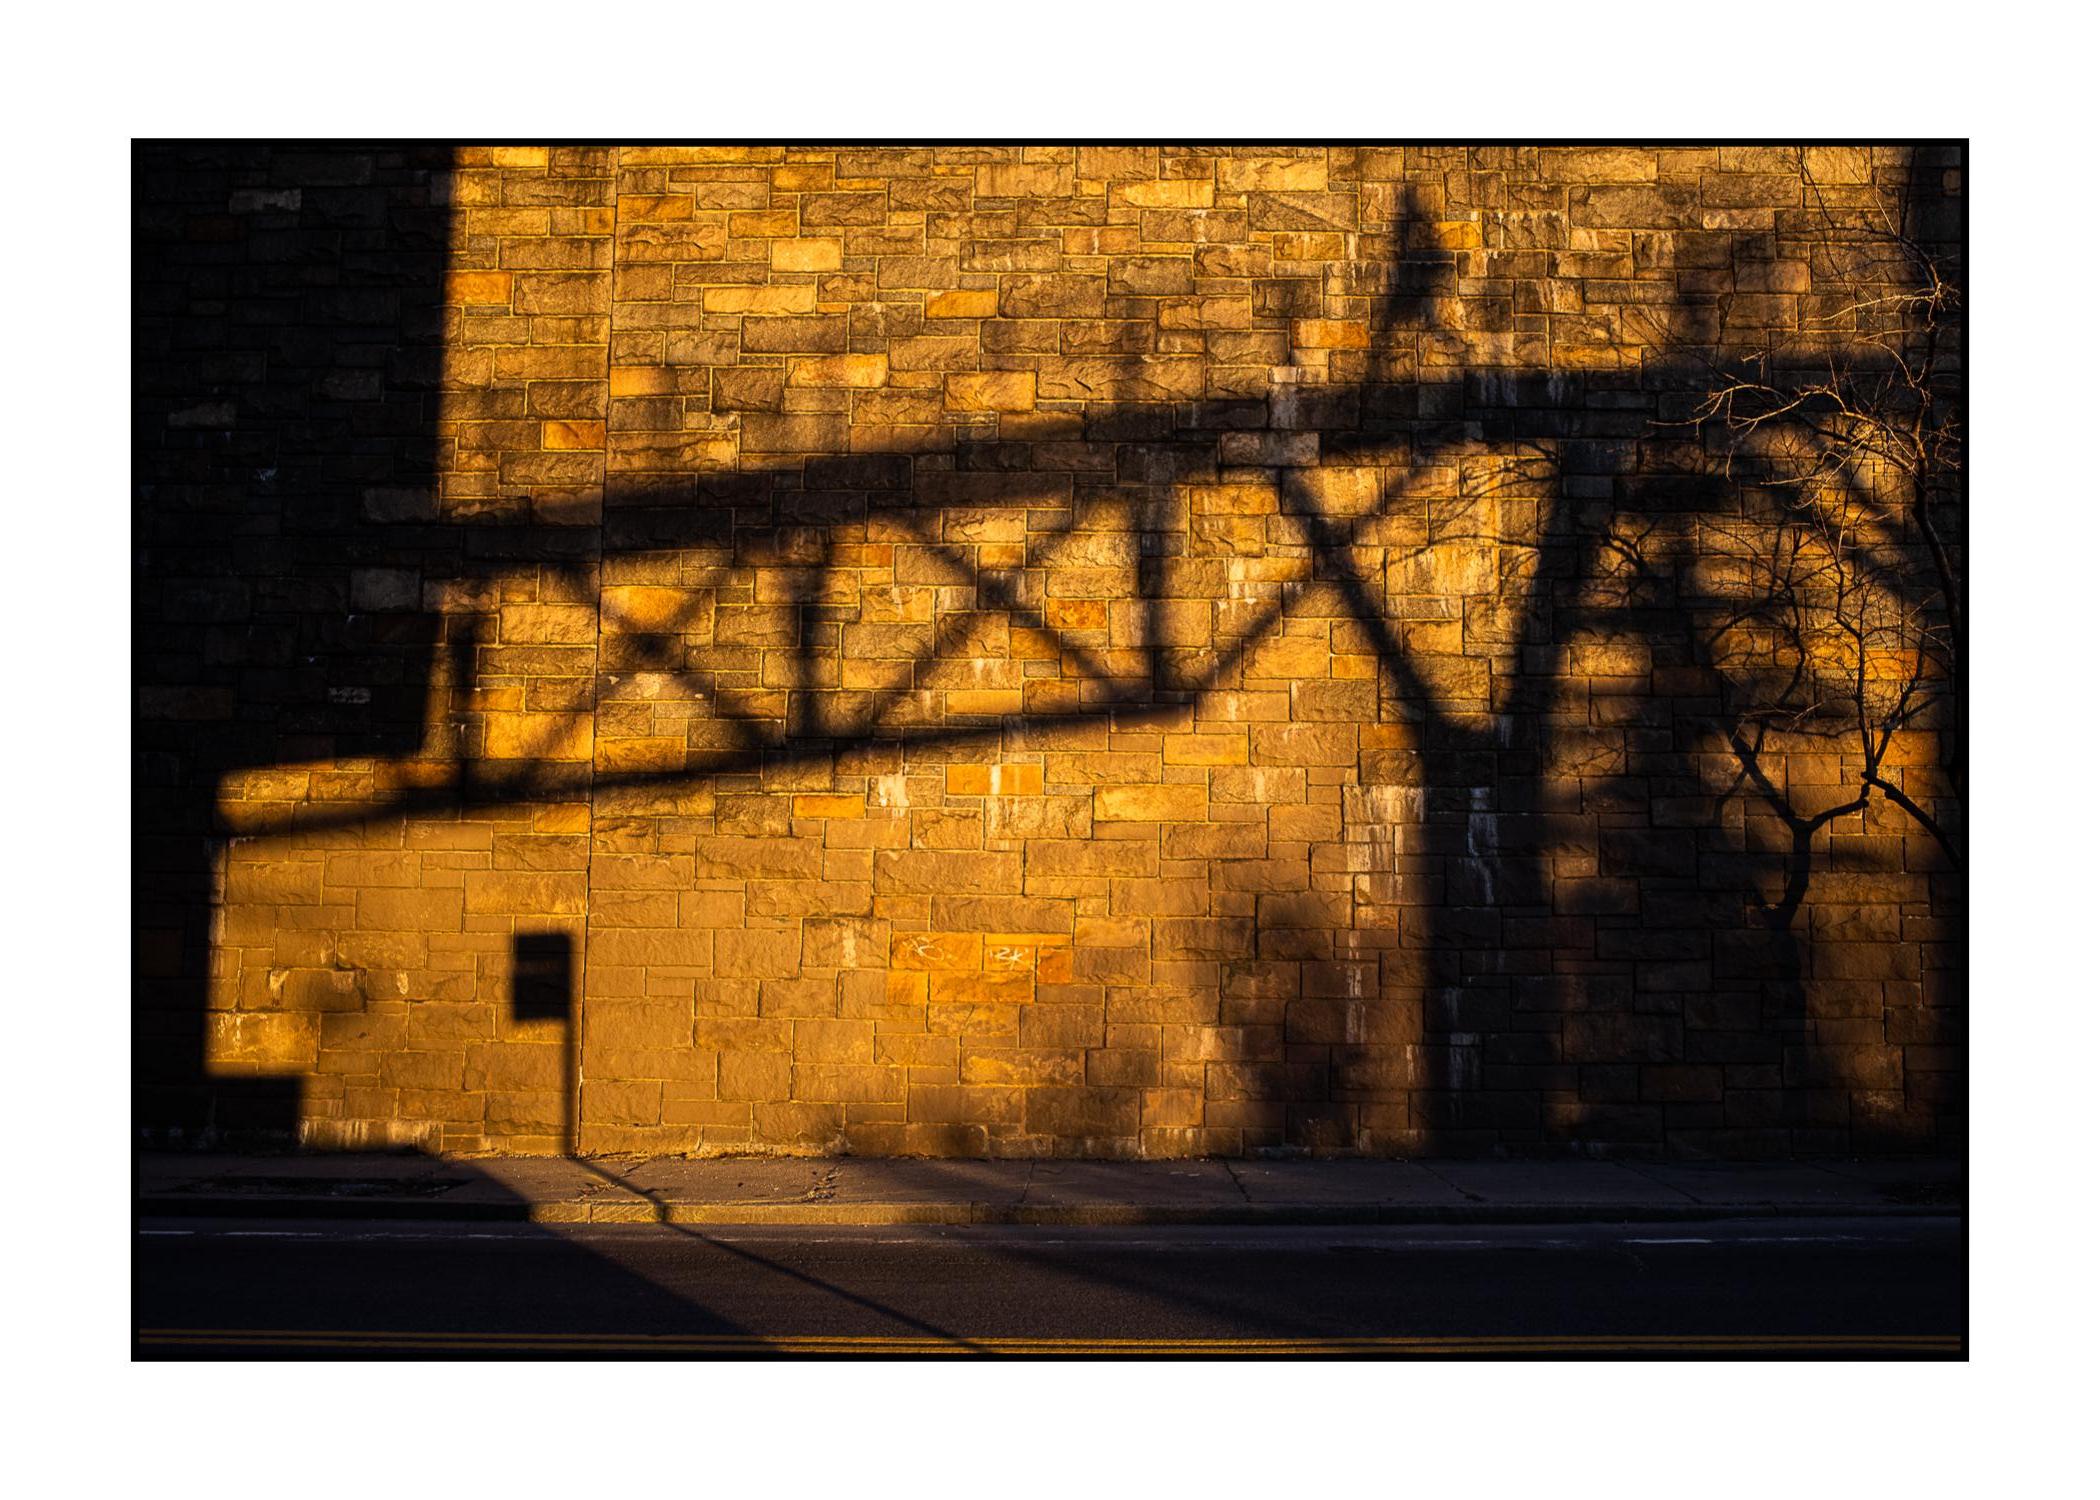 Figurative Photograph Jean-Luc Fievet - 2021-03-07-Manhattan Bridge to Brooklyn Bridge-NY-CV-08 - Photographie couleur, nuit